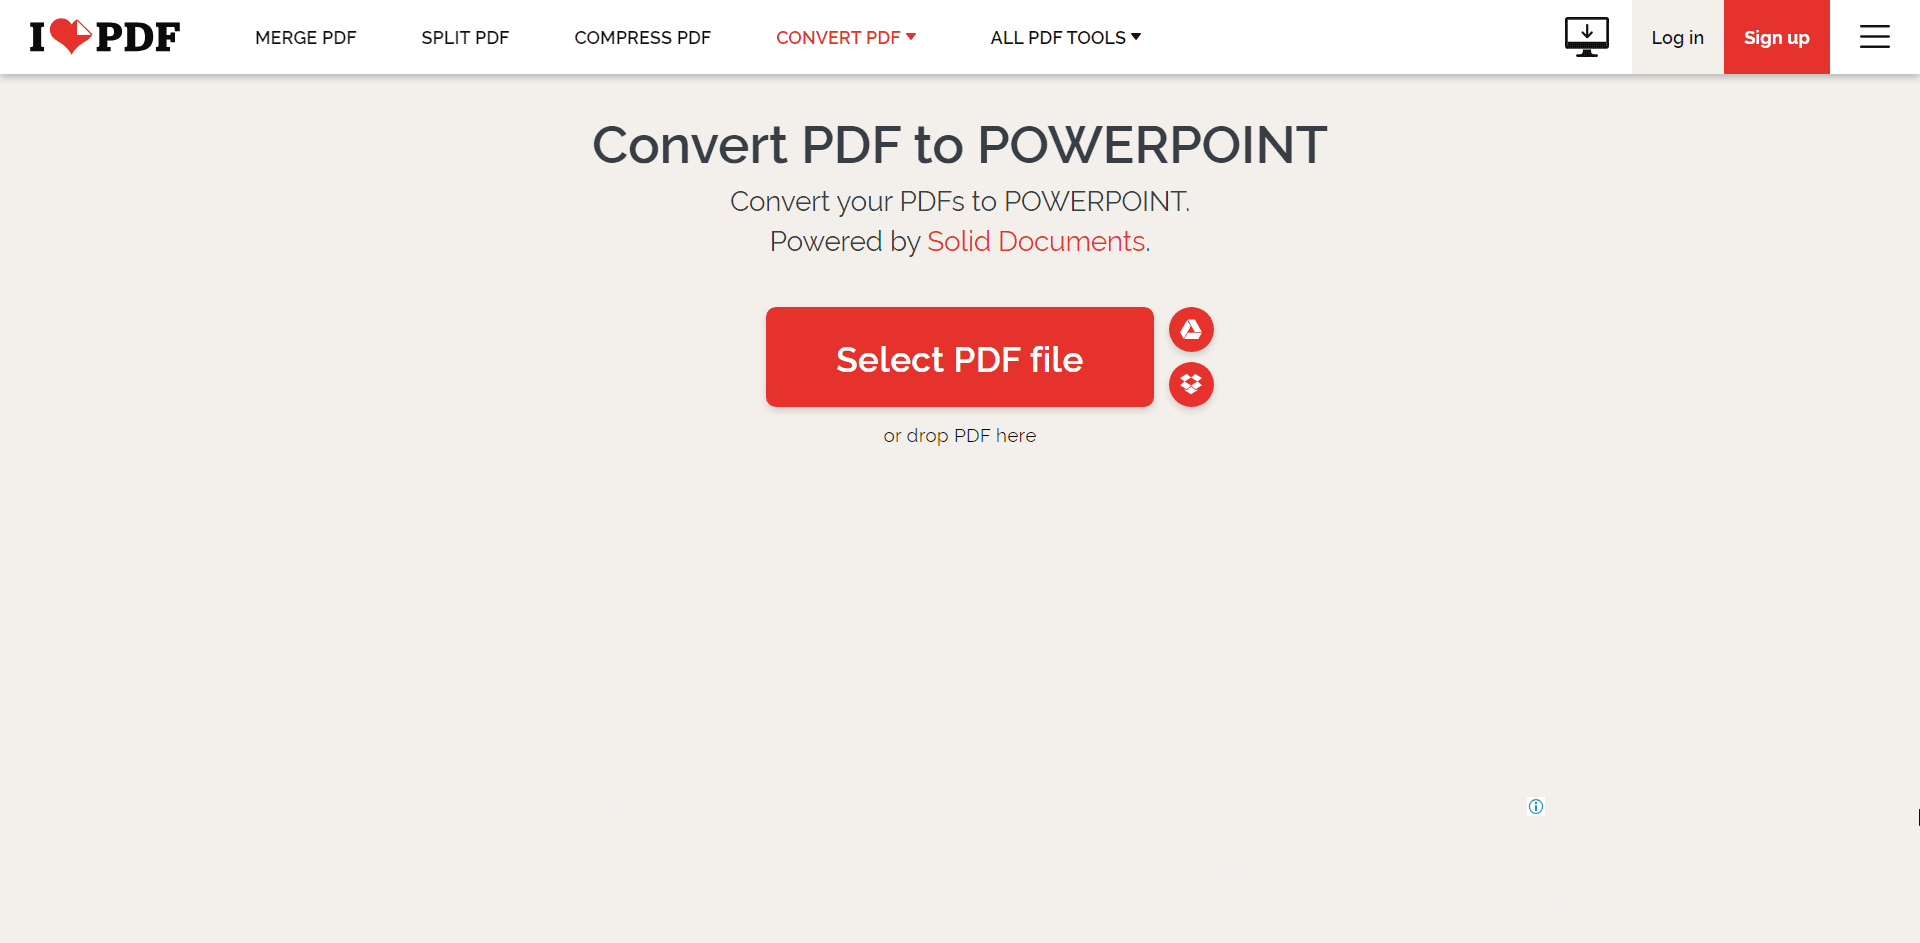 Convert PDF to PowerPoint using I Love PDF